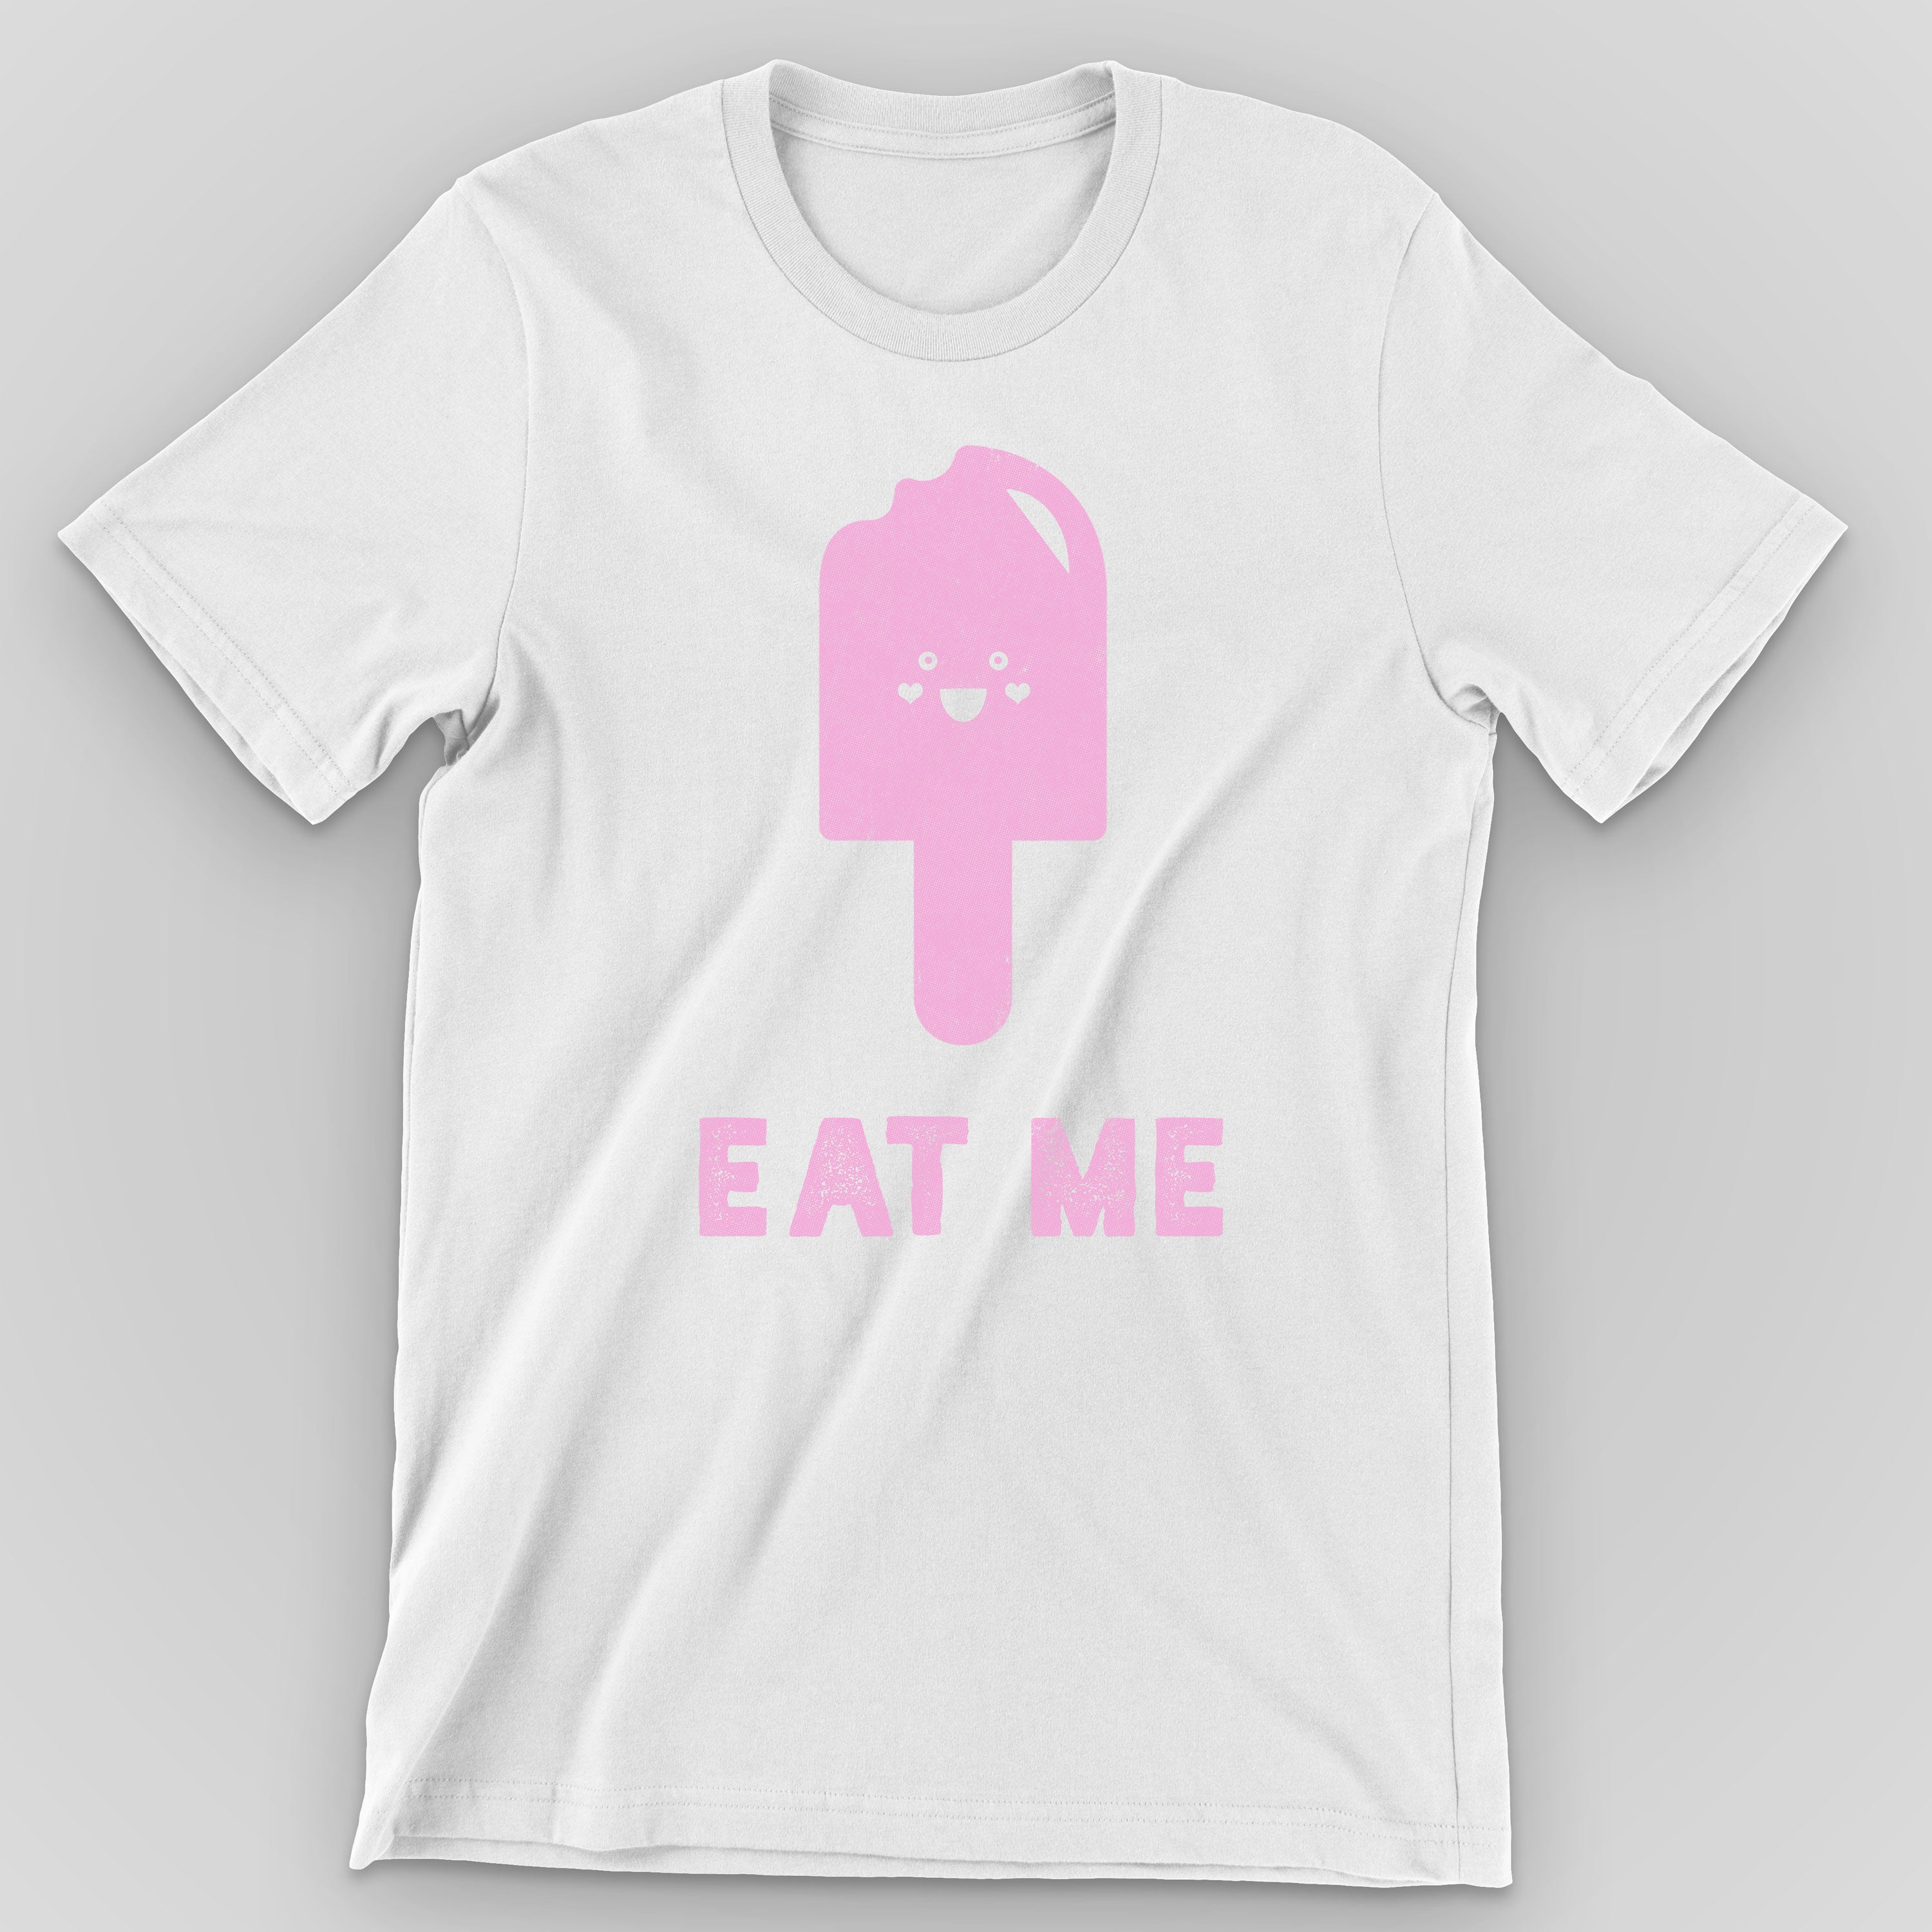 EATME BACKグラフィックTシャツ